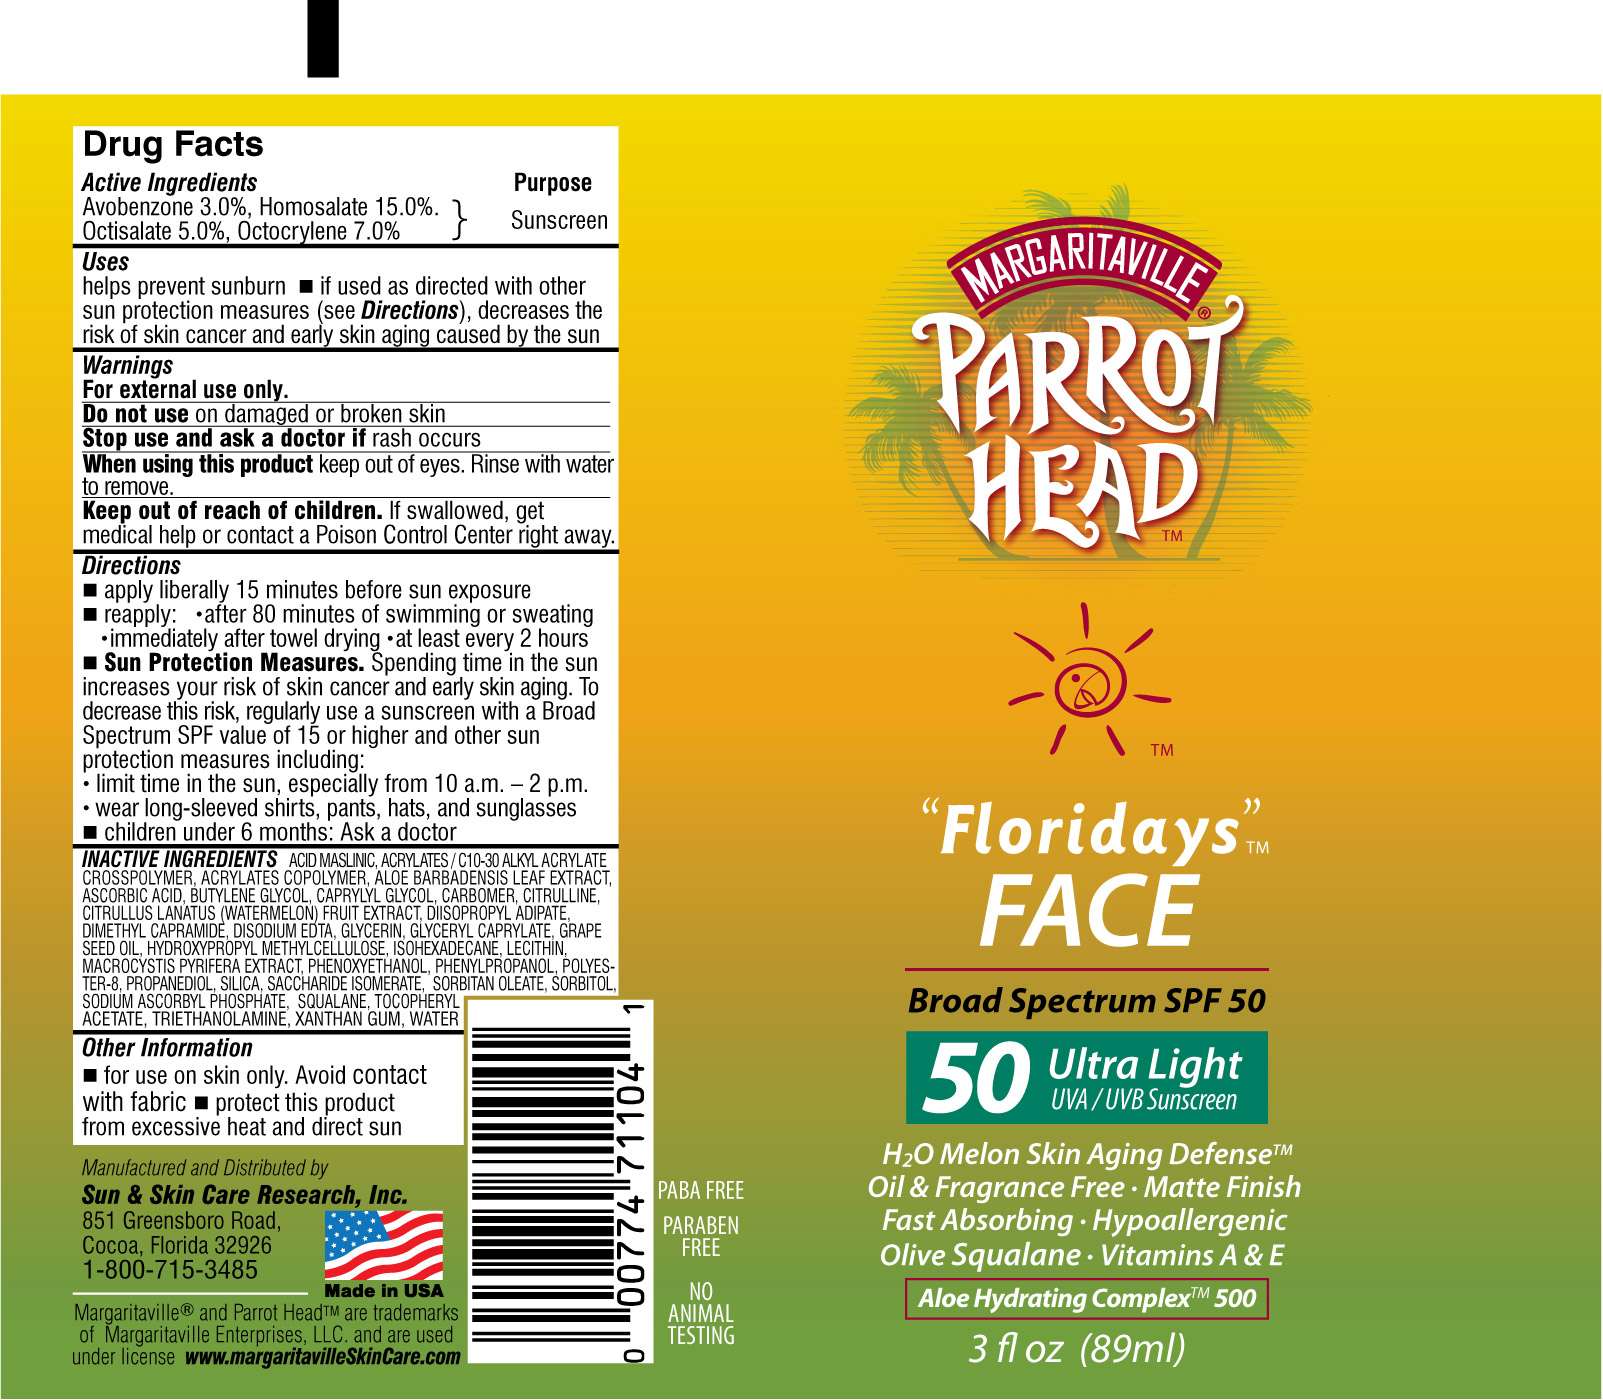 Parrot Head Floridays Face 50